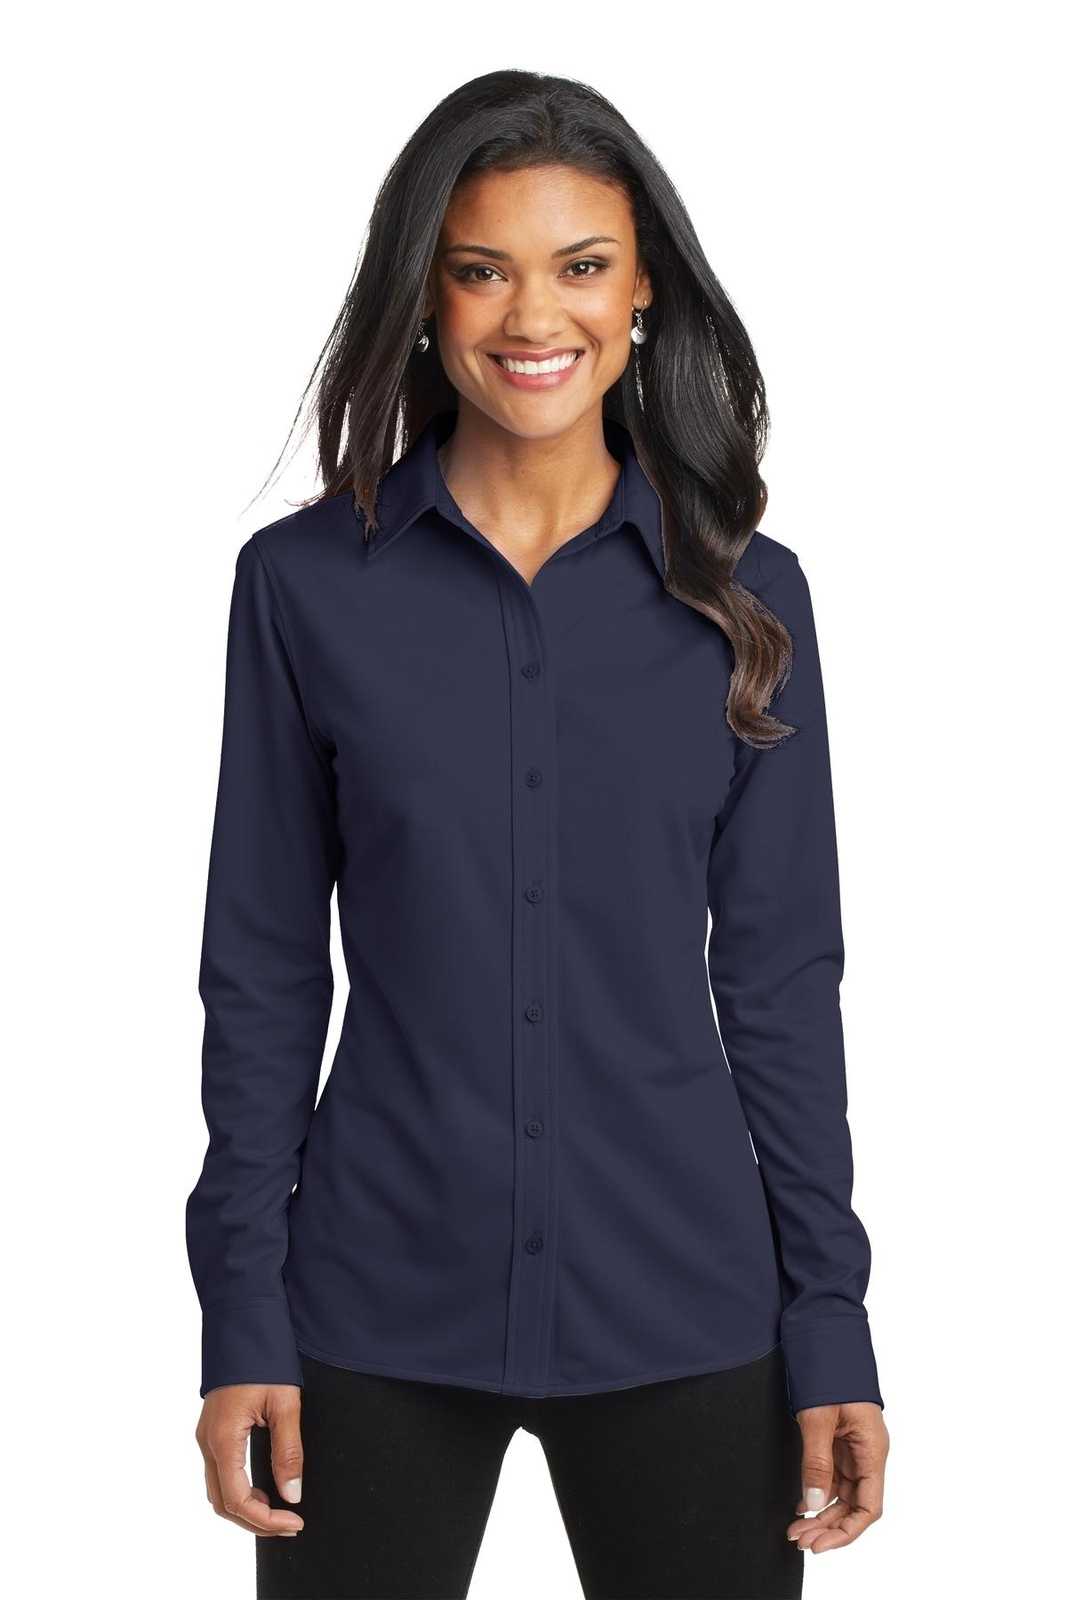 Port Authority L570 Ladies Dimension Knit Dress Shirt - Dark Navy - HIT a Double - 1